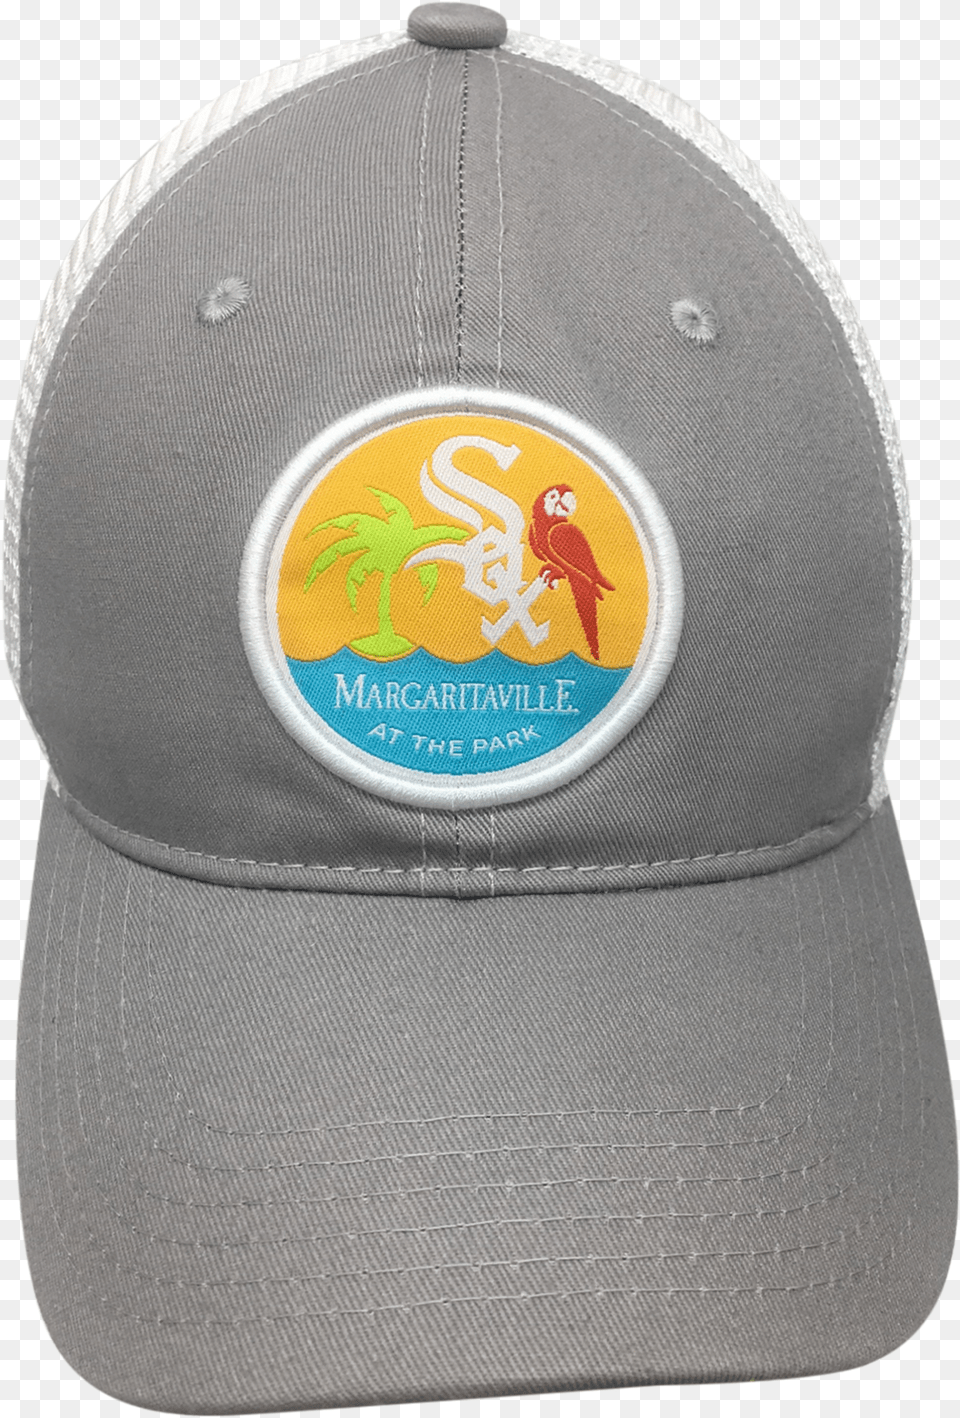 Margaritaville Night Hat Cutout Baseball Cap, Baseball Cap, Clothing Free Png Download